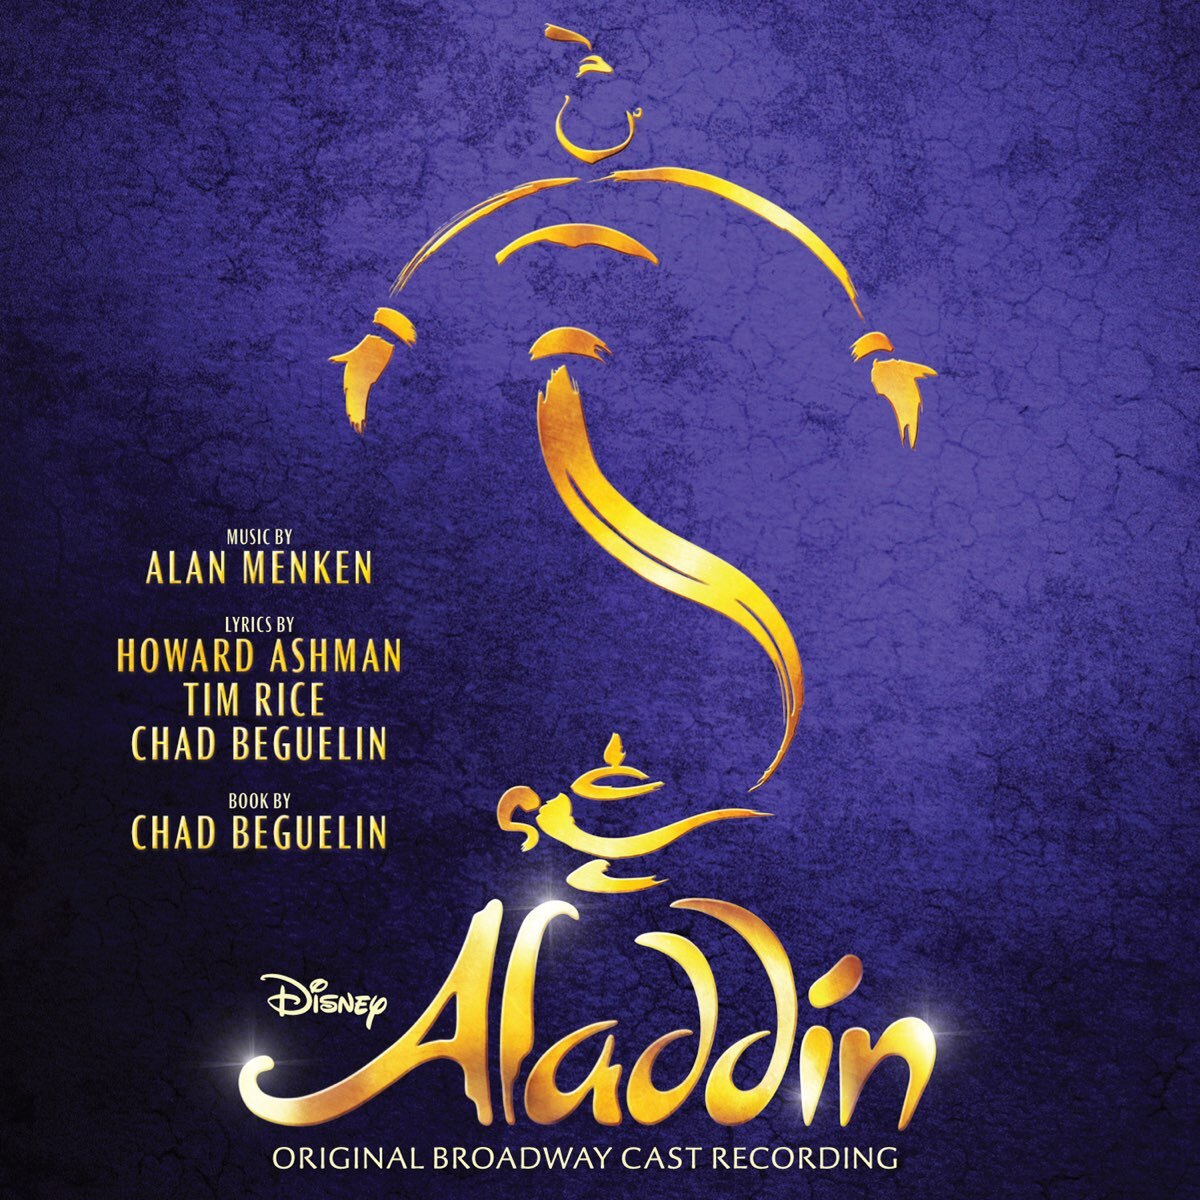 Aladdin cast recording